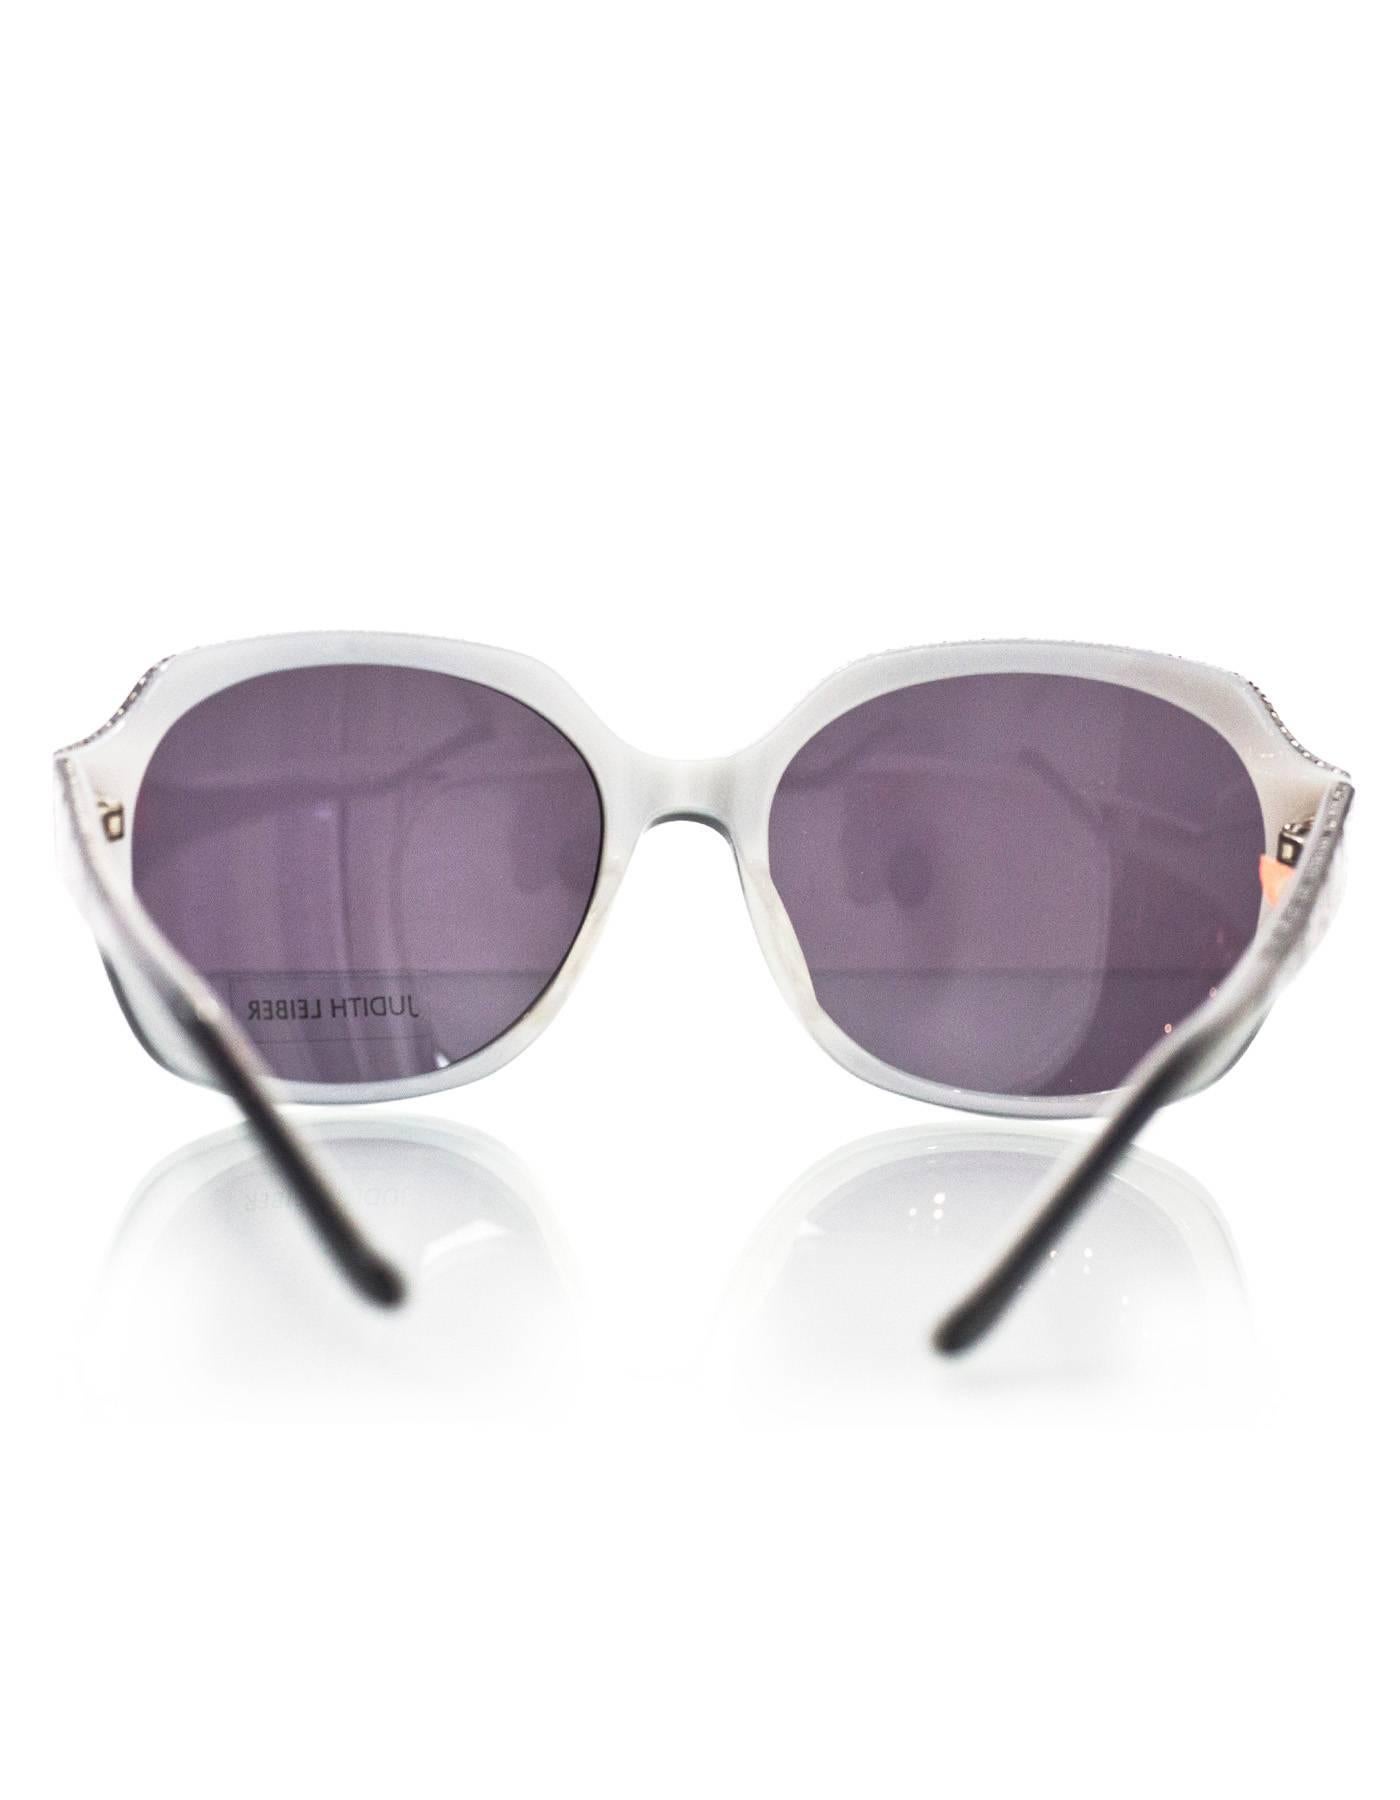 Women's Judith Leiber JL1169 Black Swarovski Crystal Sunglasses with Case